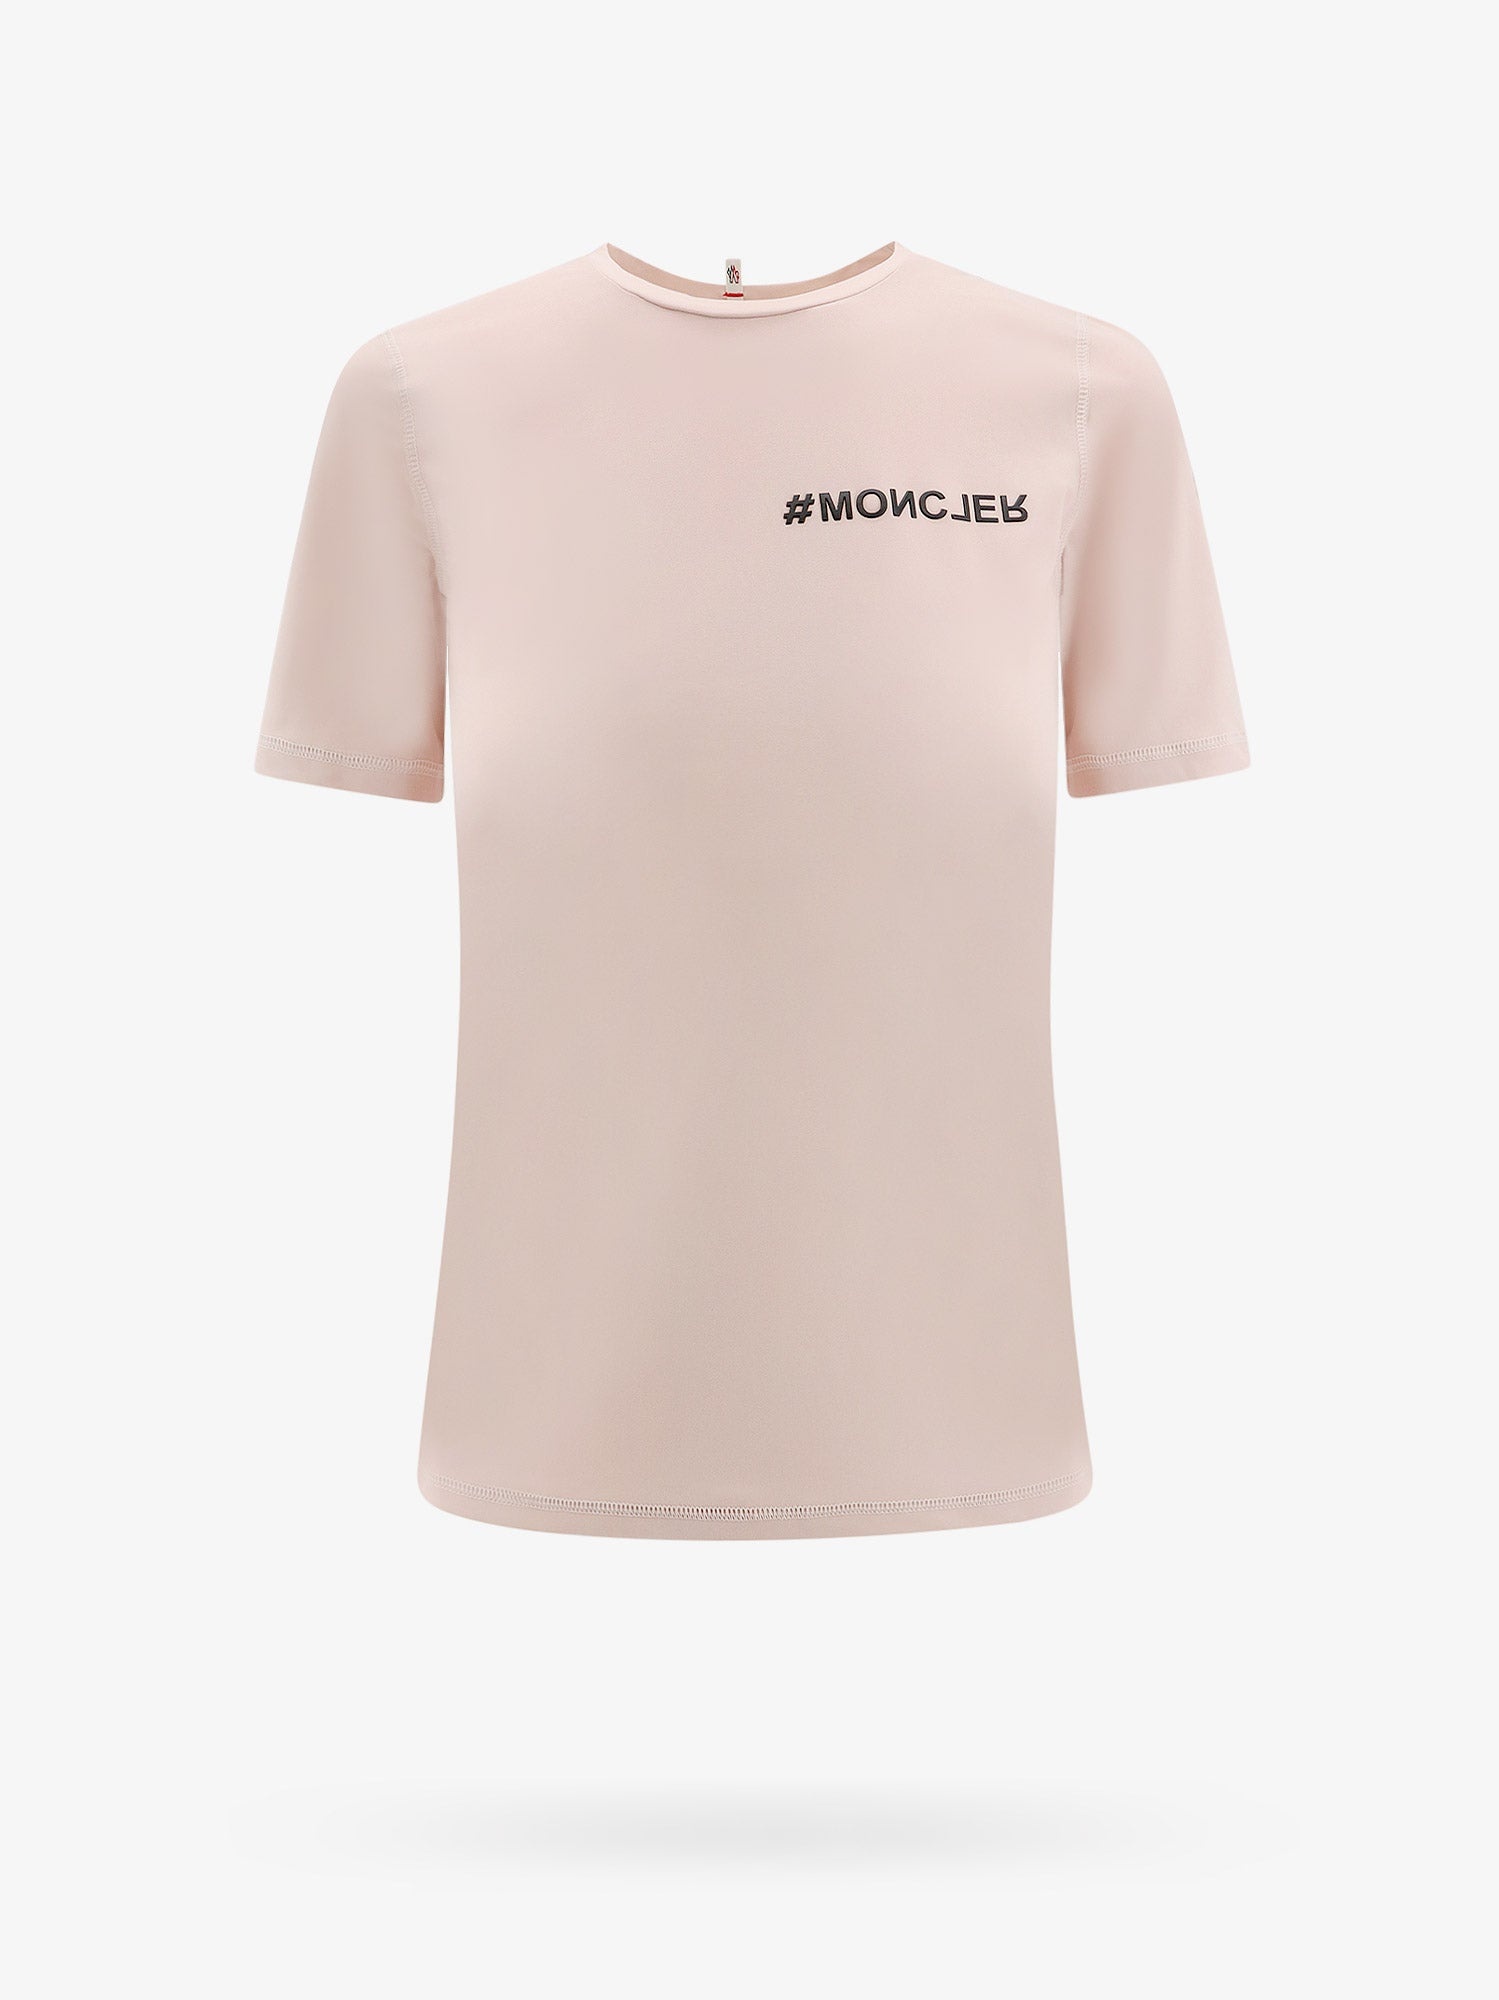 Moncler Grenoble Woman T-Shirt Woman Pink T-Shirts - 1